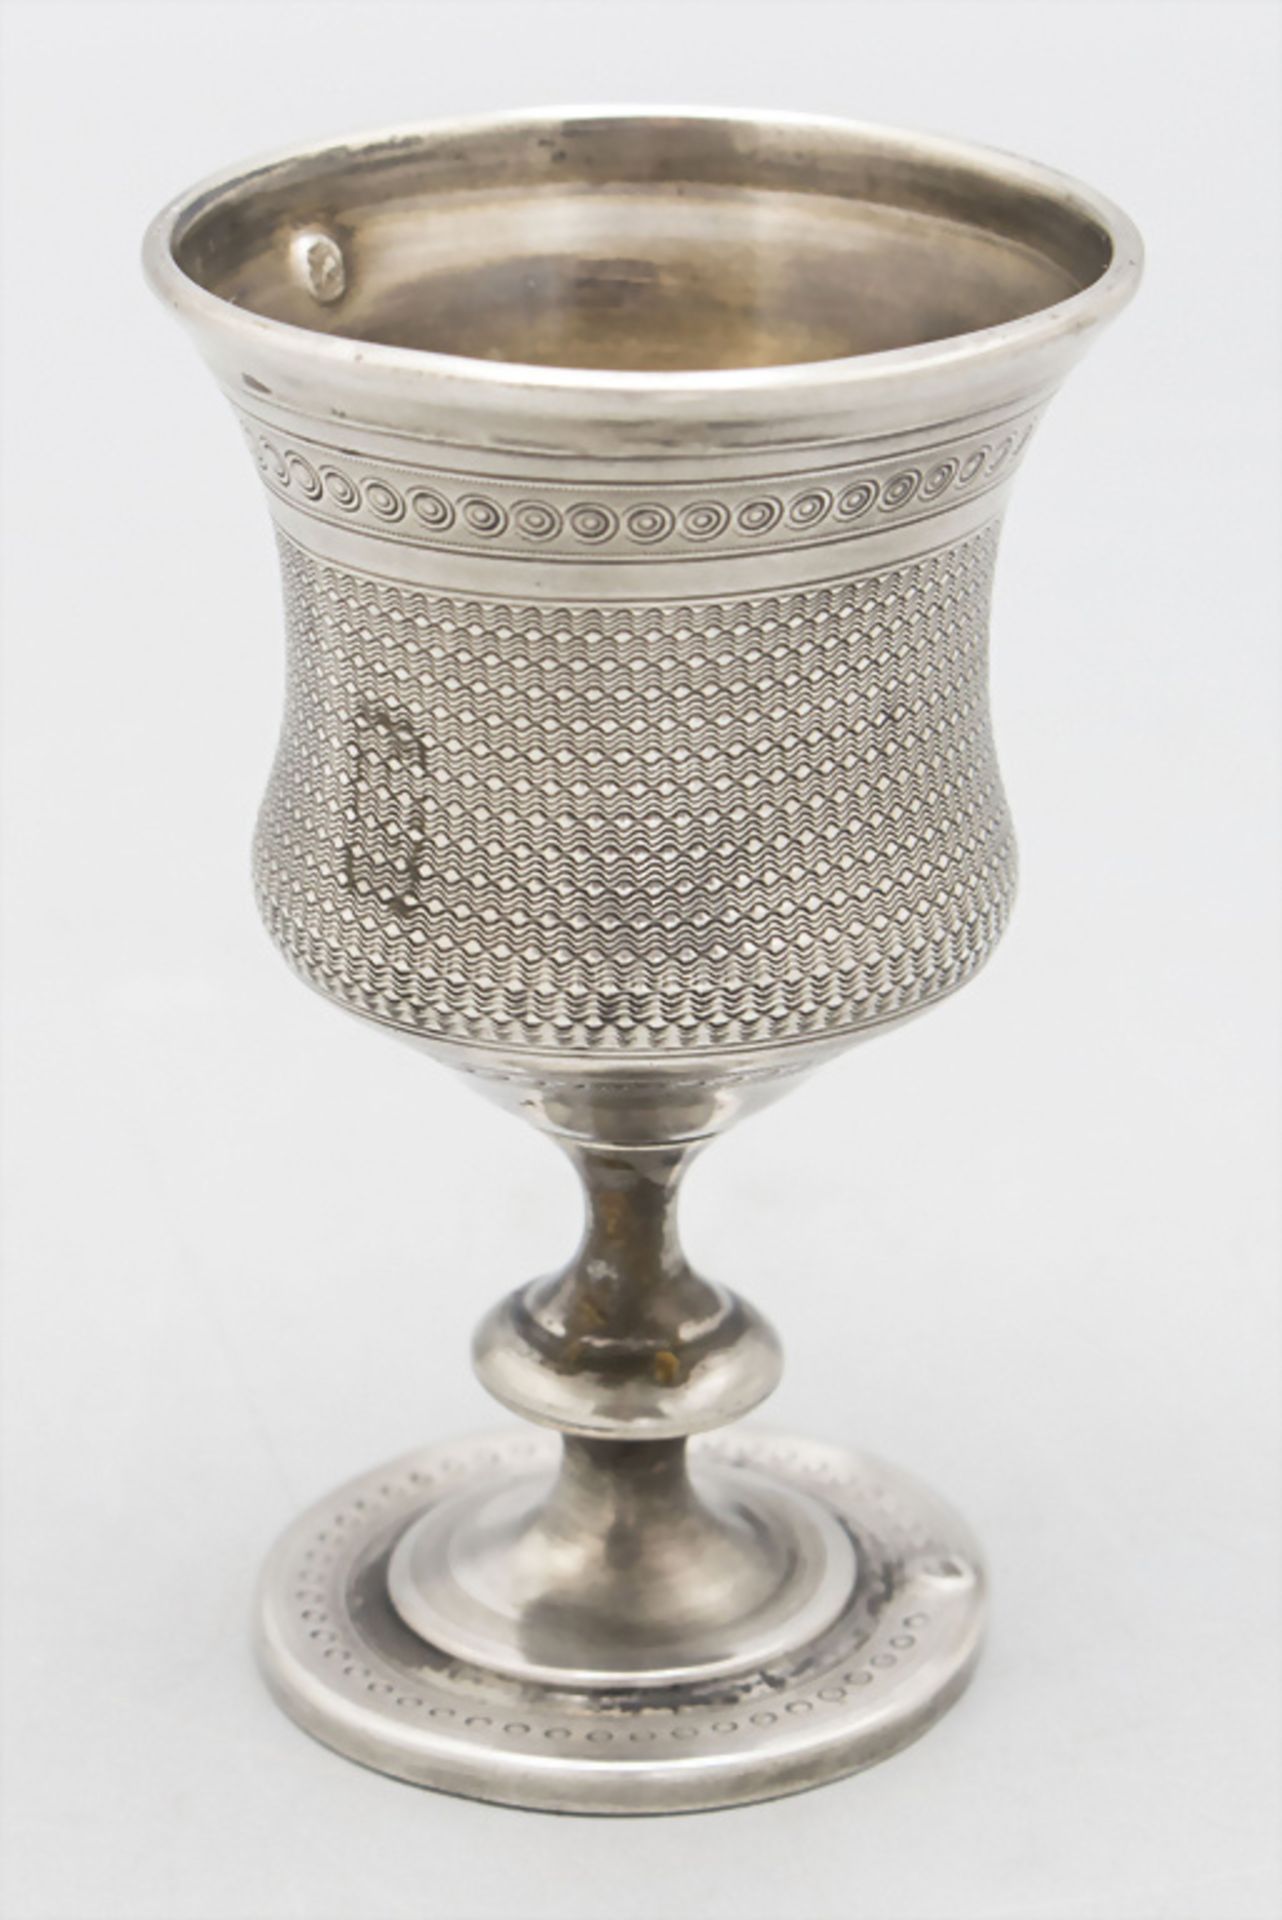 Schnapsbecher / A silver liquor cup, Frankreich, 2. Hälfte 19. Jh. - Image 2 of 5